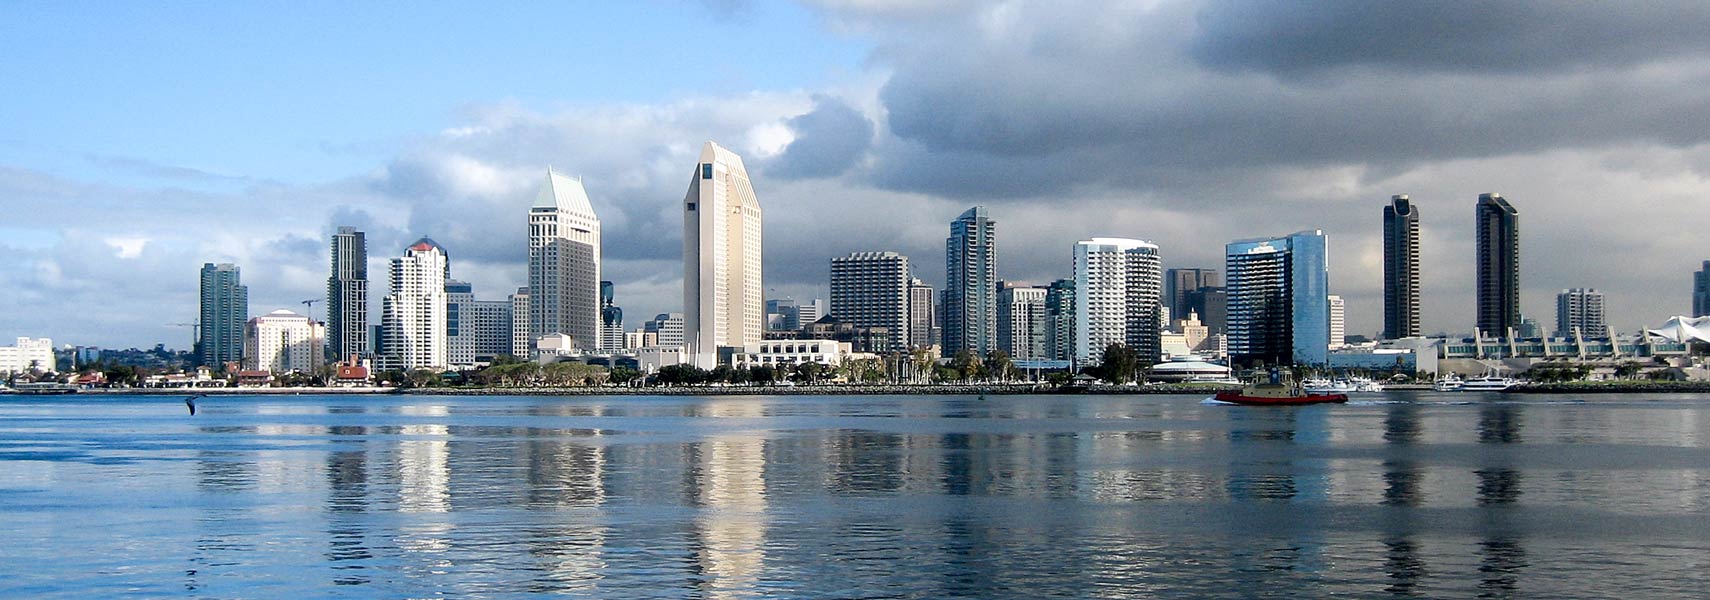 Skyline of San Diego, California